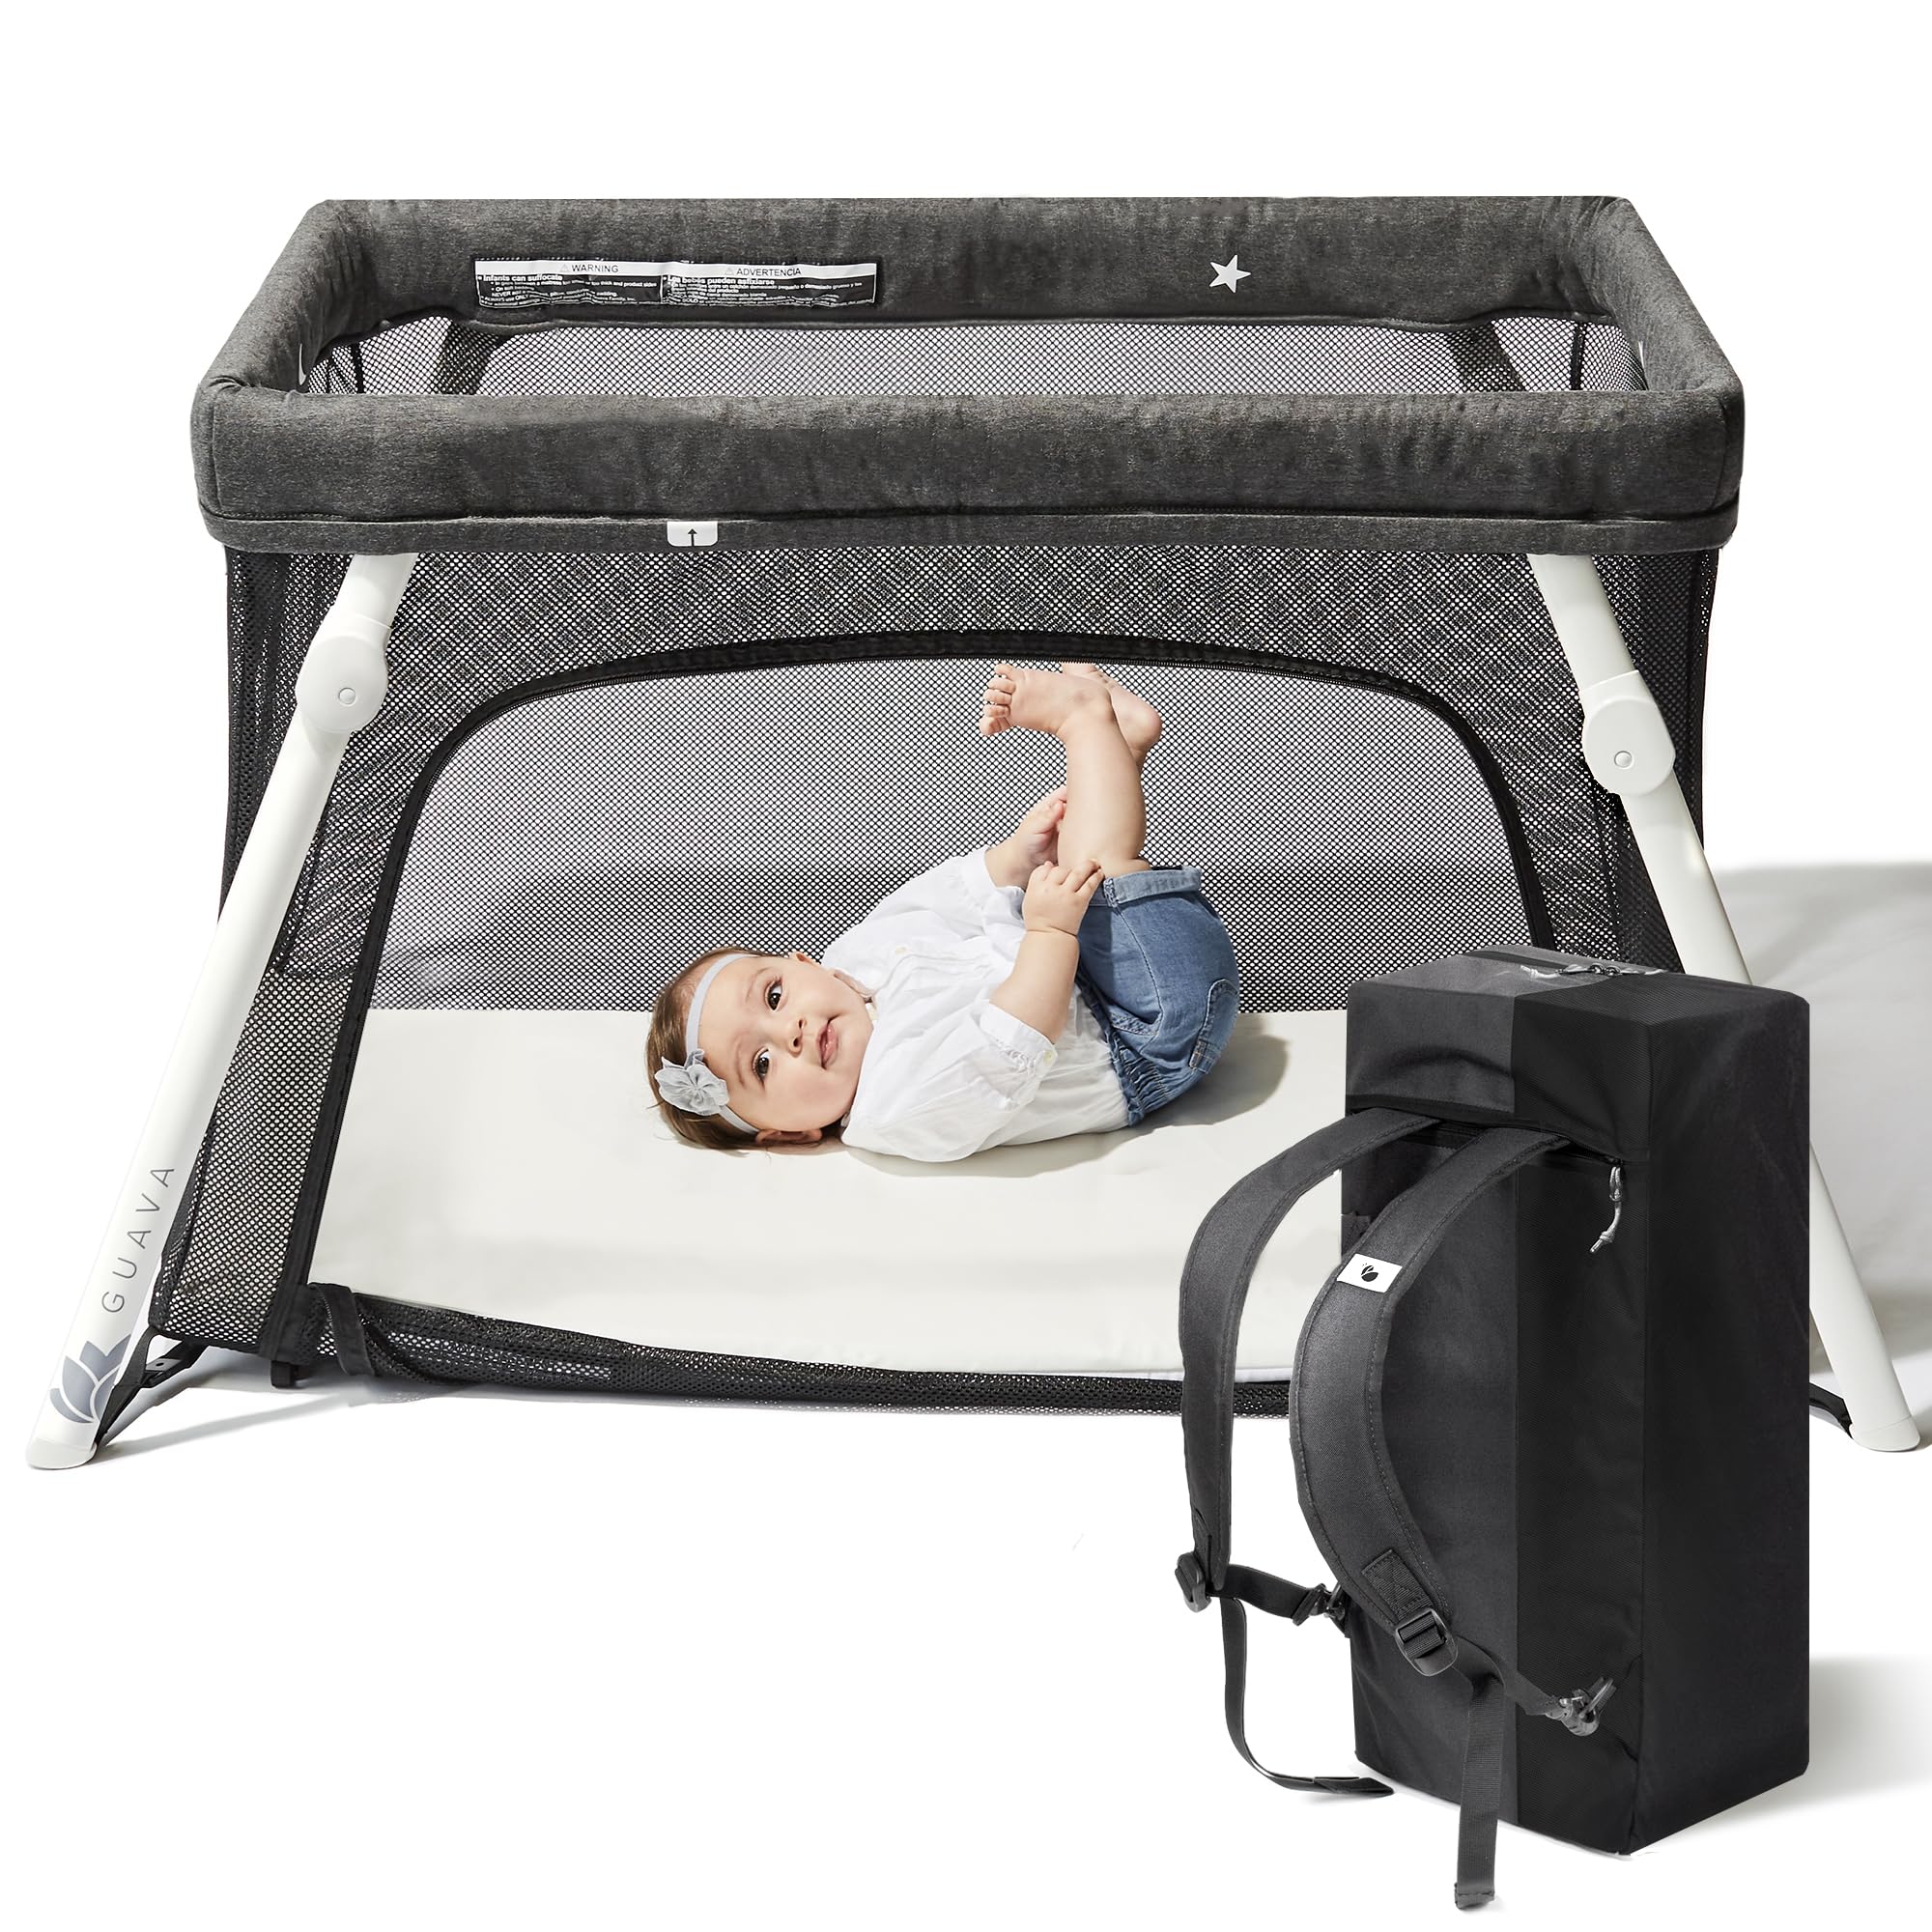 how to make baby sleep in crib